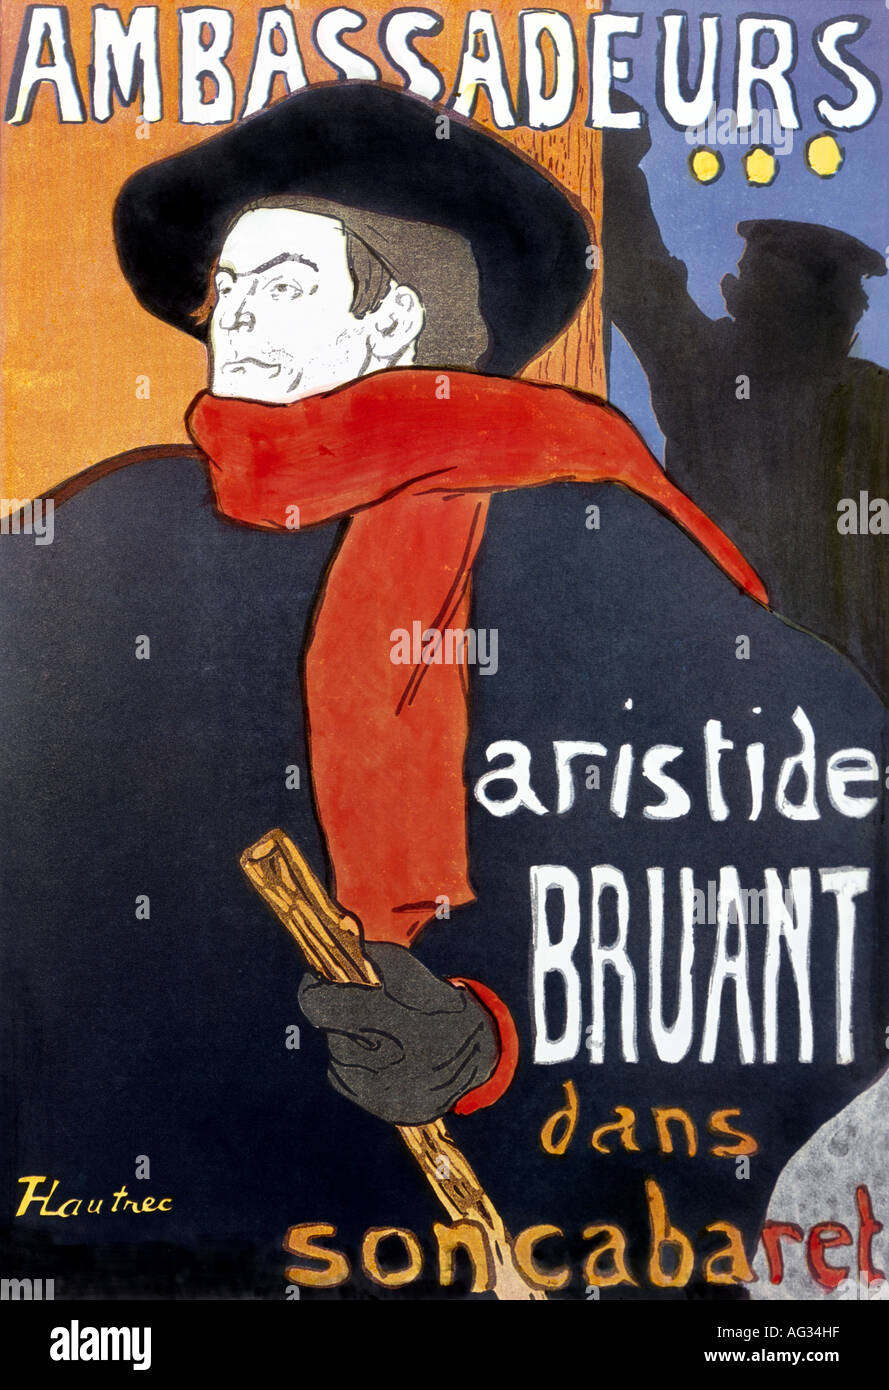 fine arts, Toulouse-Lautrec, Henri de, (24.11.1864 - 9.9.1909),  poster "Ambassadeurs - Aristide Bruant Dans Son Cabaret", circa 1895, lithograph, private collection,  , Artist's Copyright has not to be cleared Stock Photo